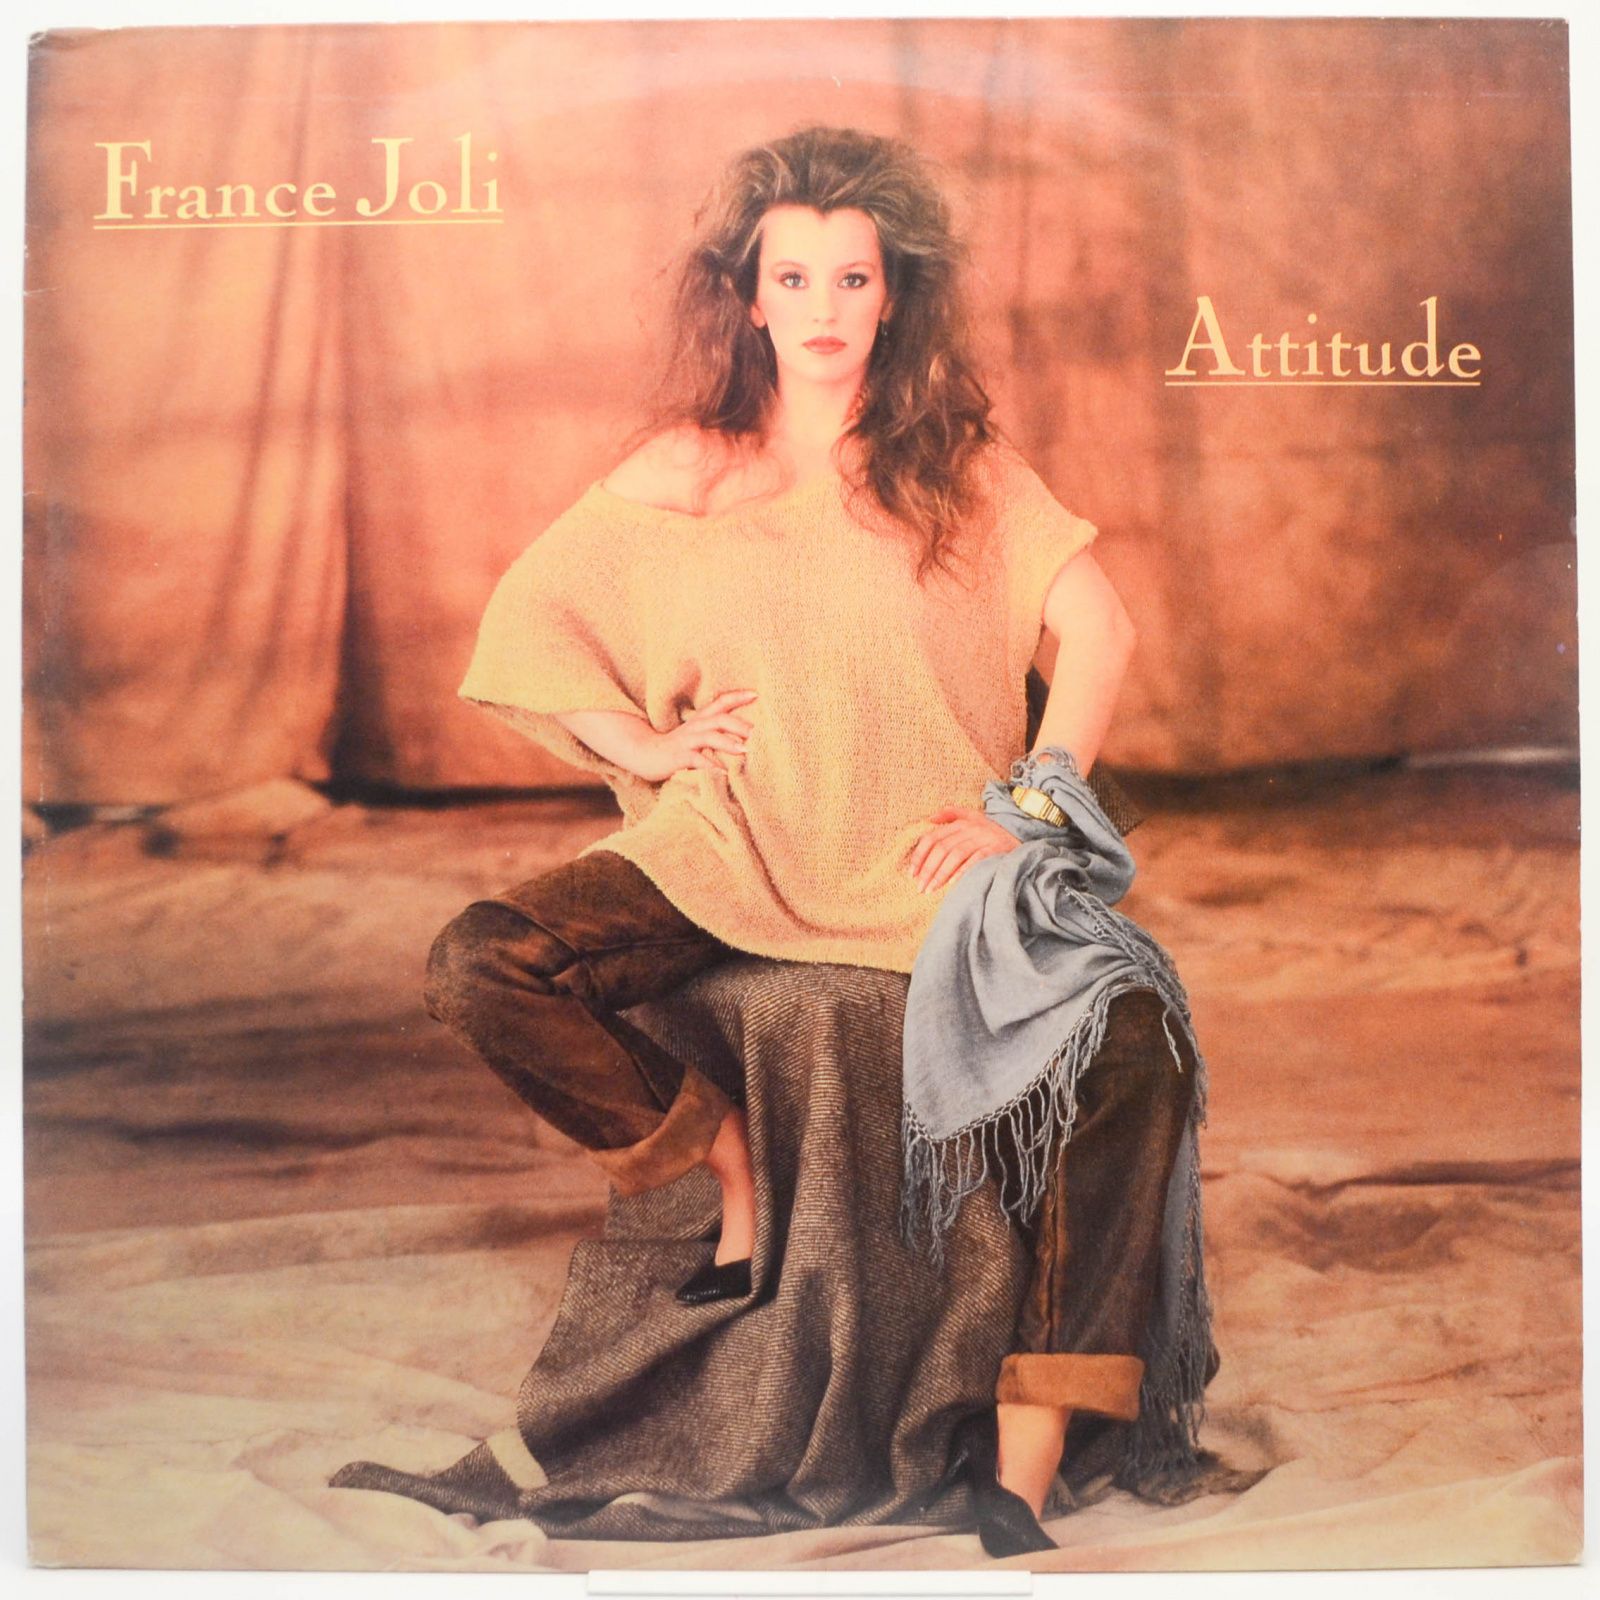 France Joli — Attitude, 1983